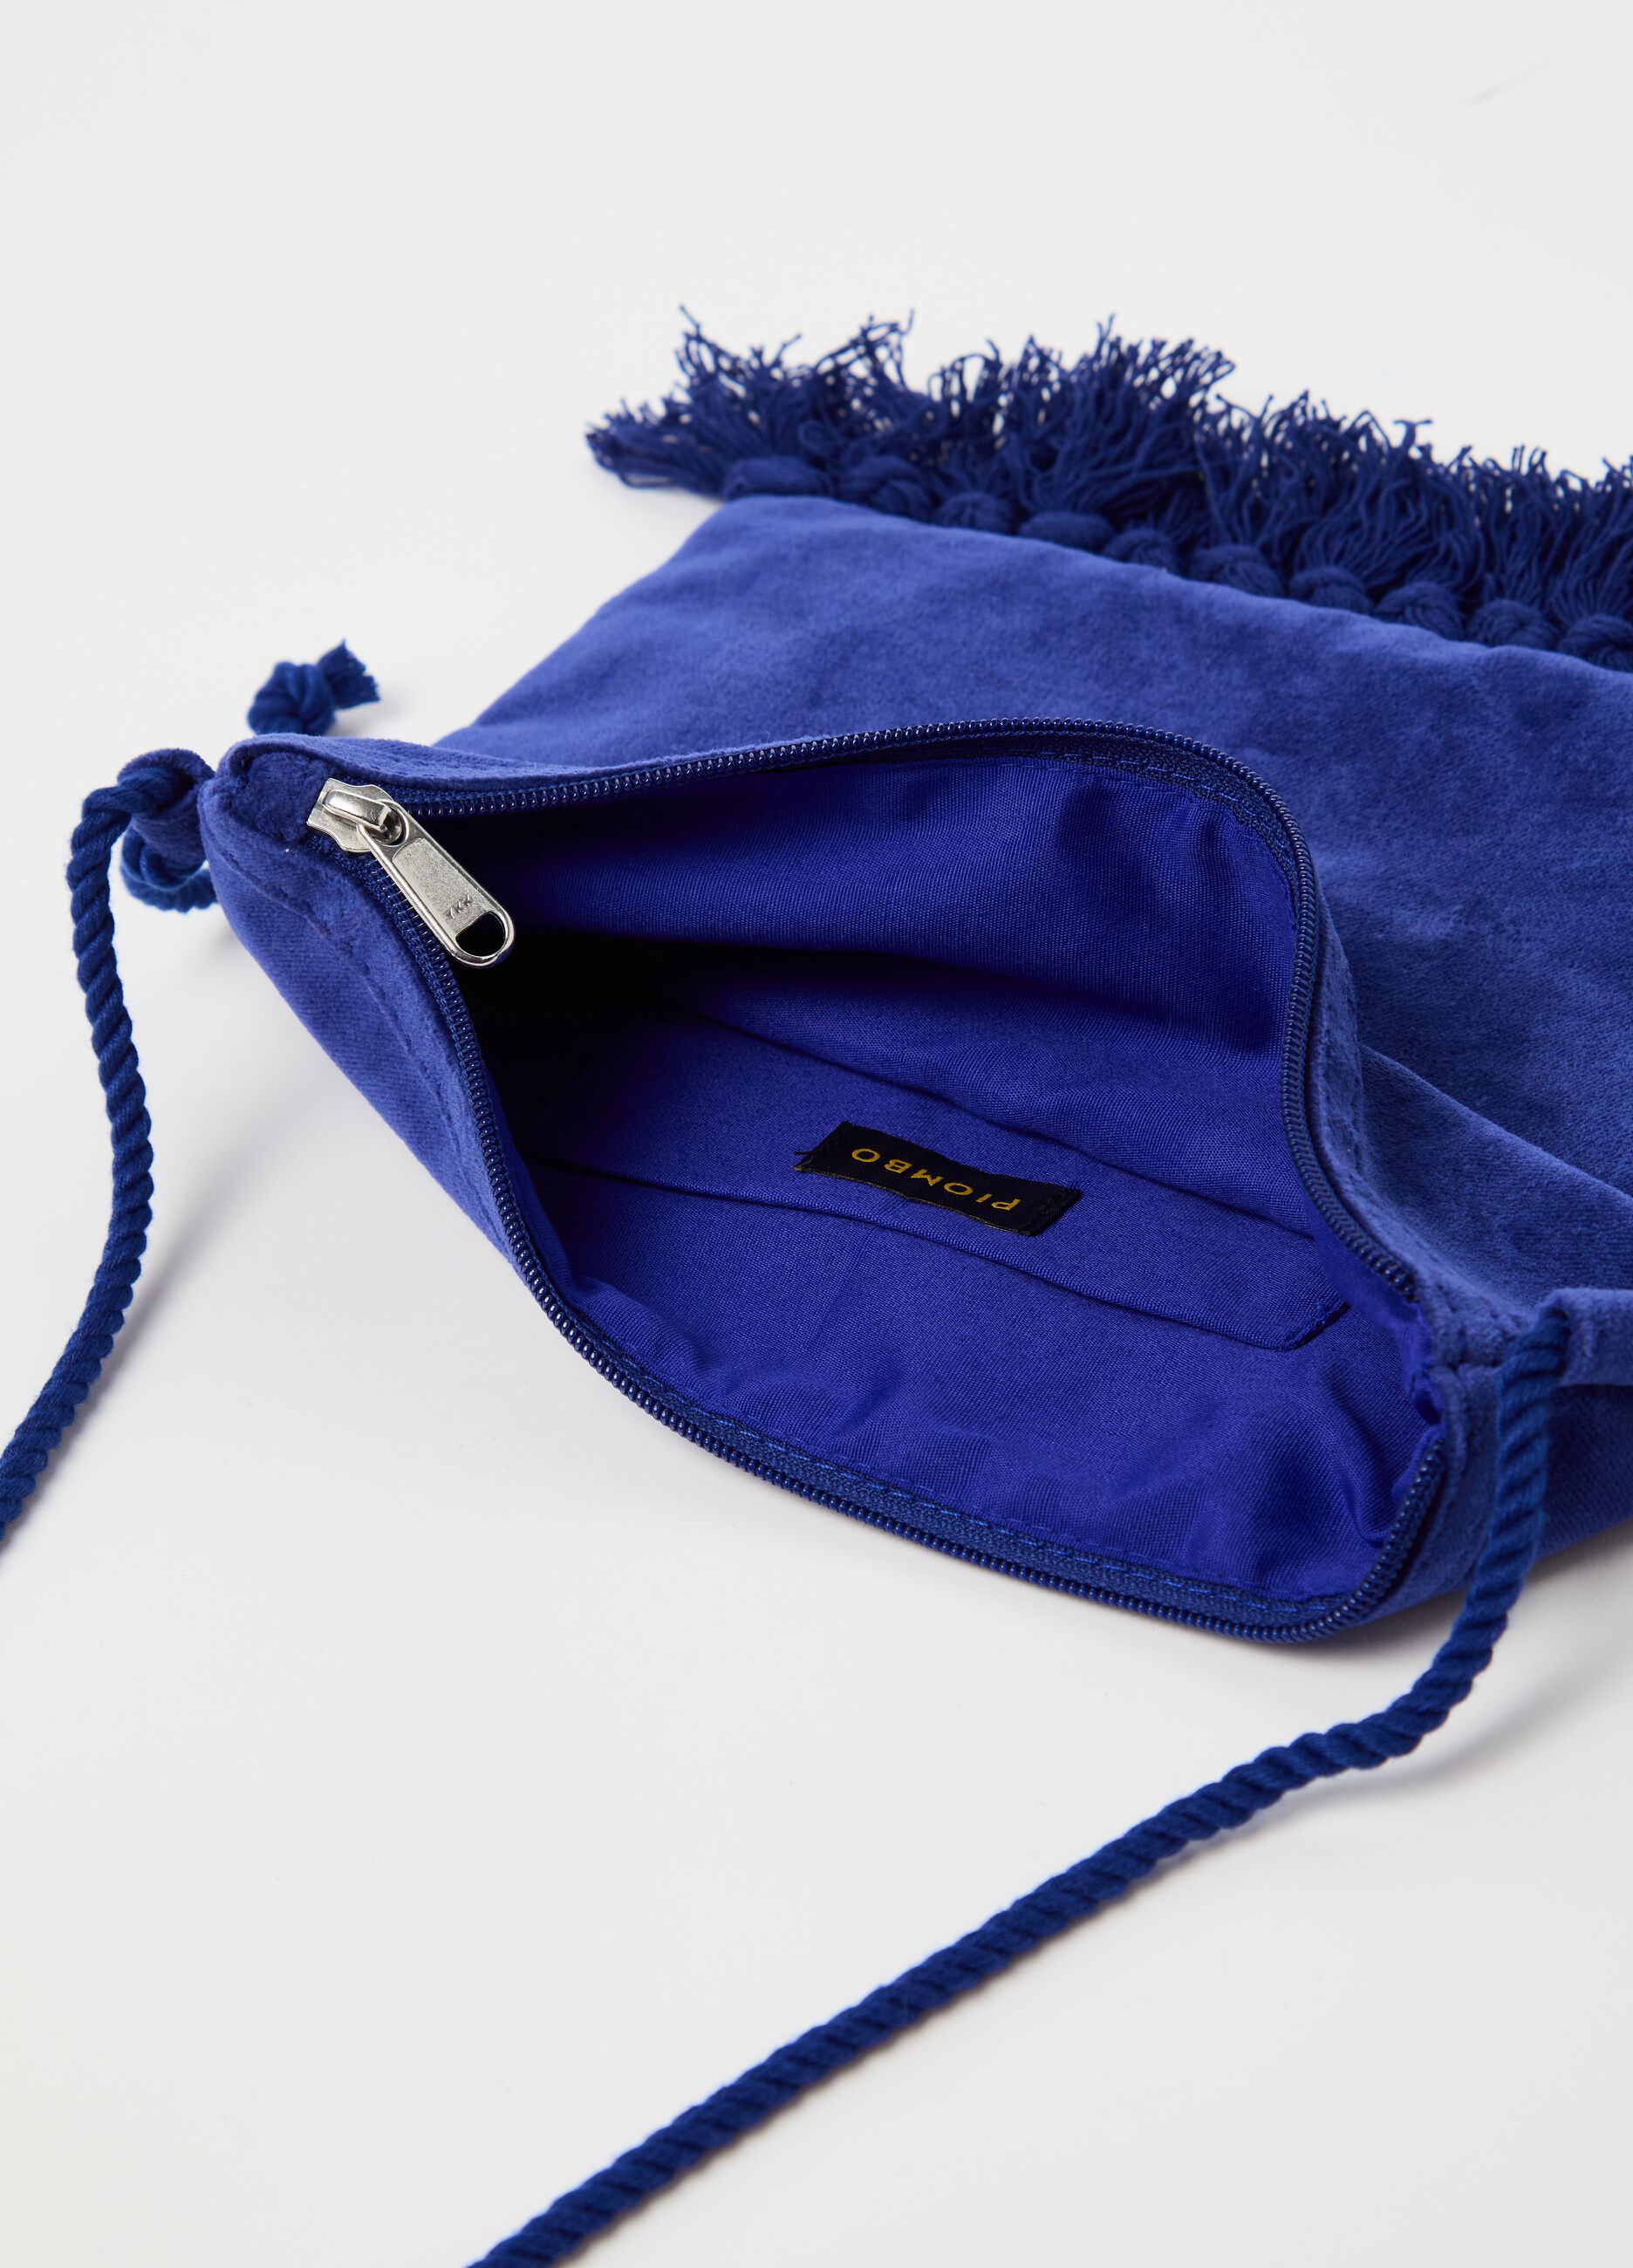 Velvet clutch bag with tassels